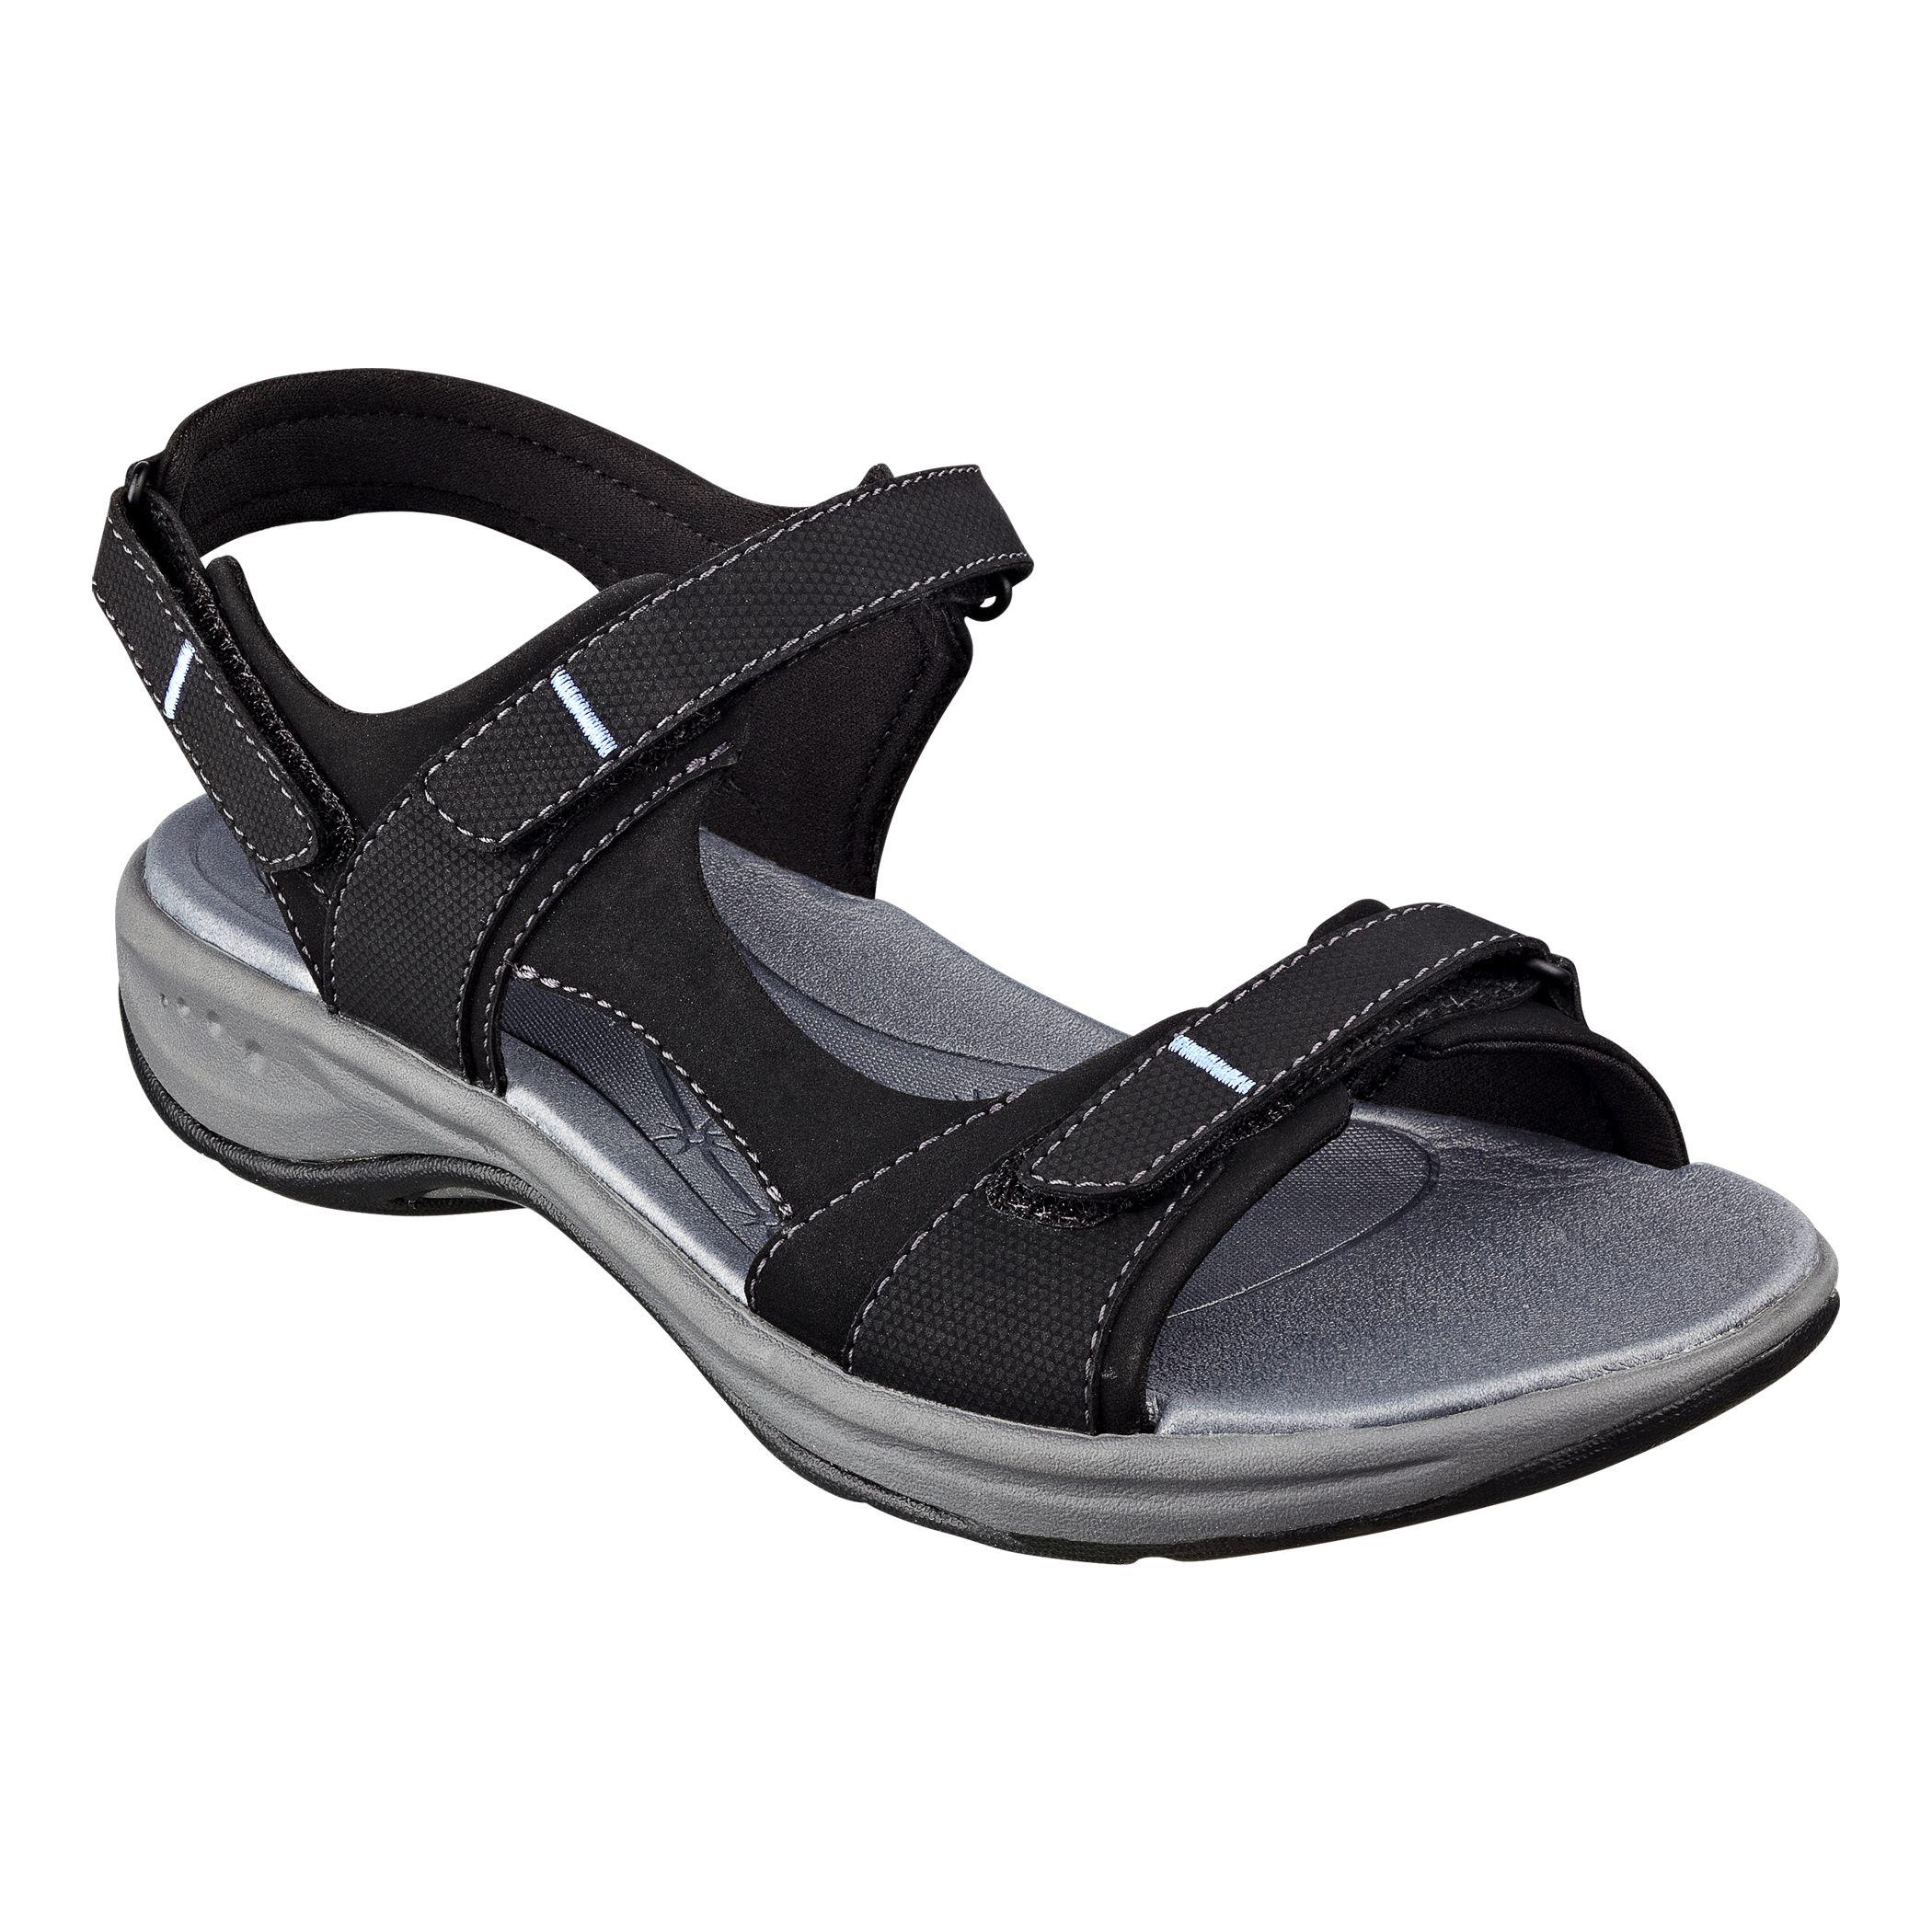 Easy Spirit Synthetic Egnita Flat Sandals in Black - Lyst